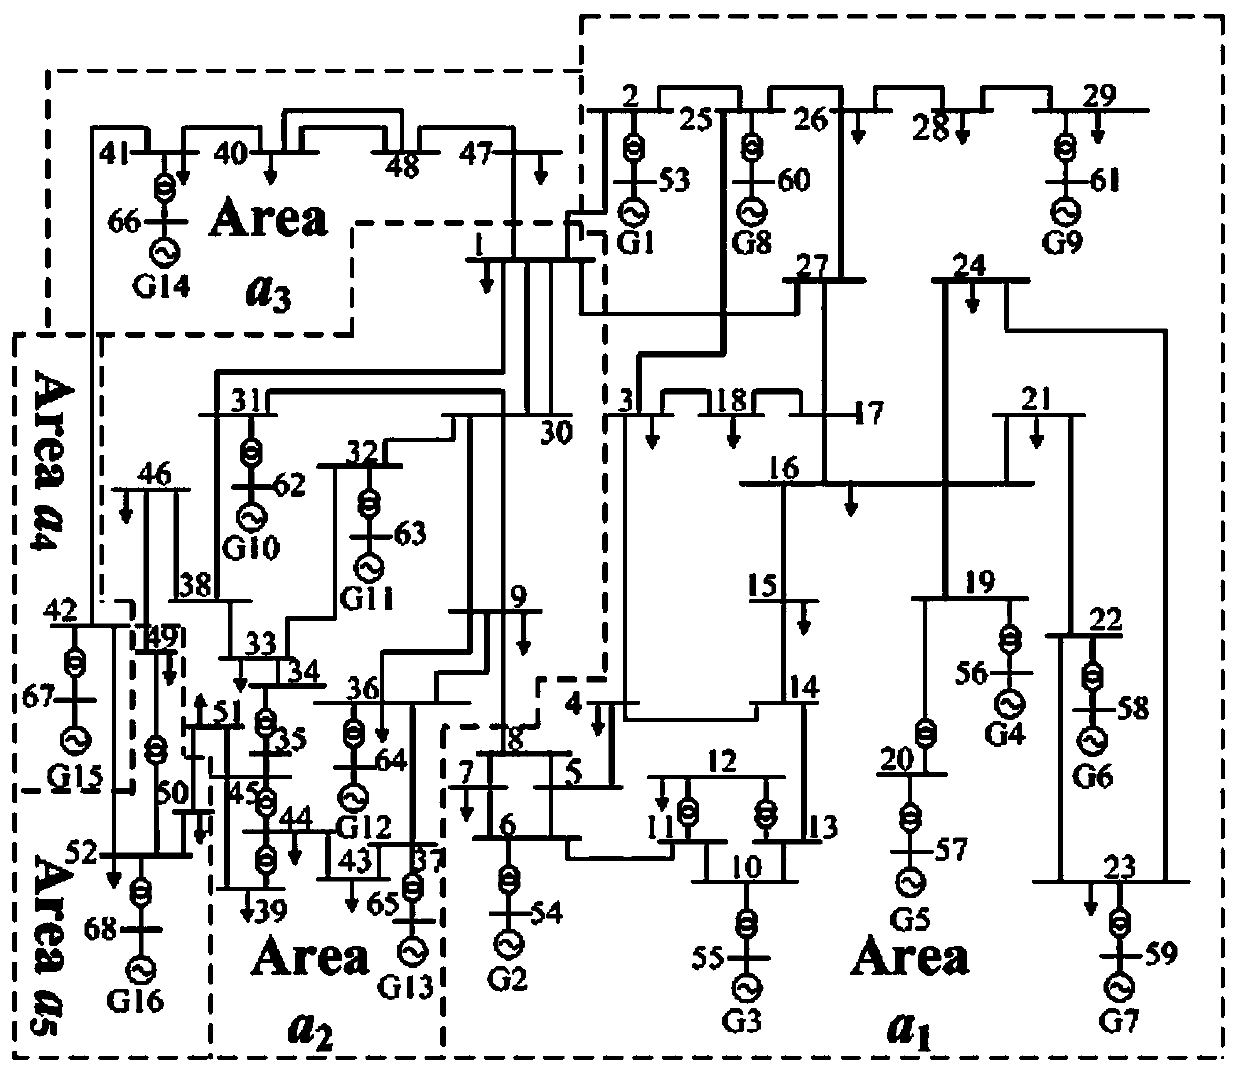 CEEMDAN algorithm-based power system low-frequency oscillation mode identification method